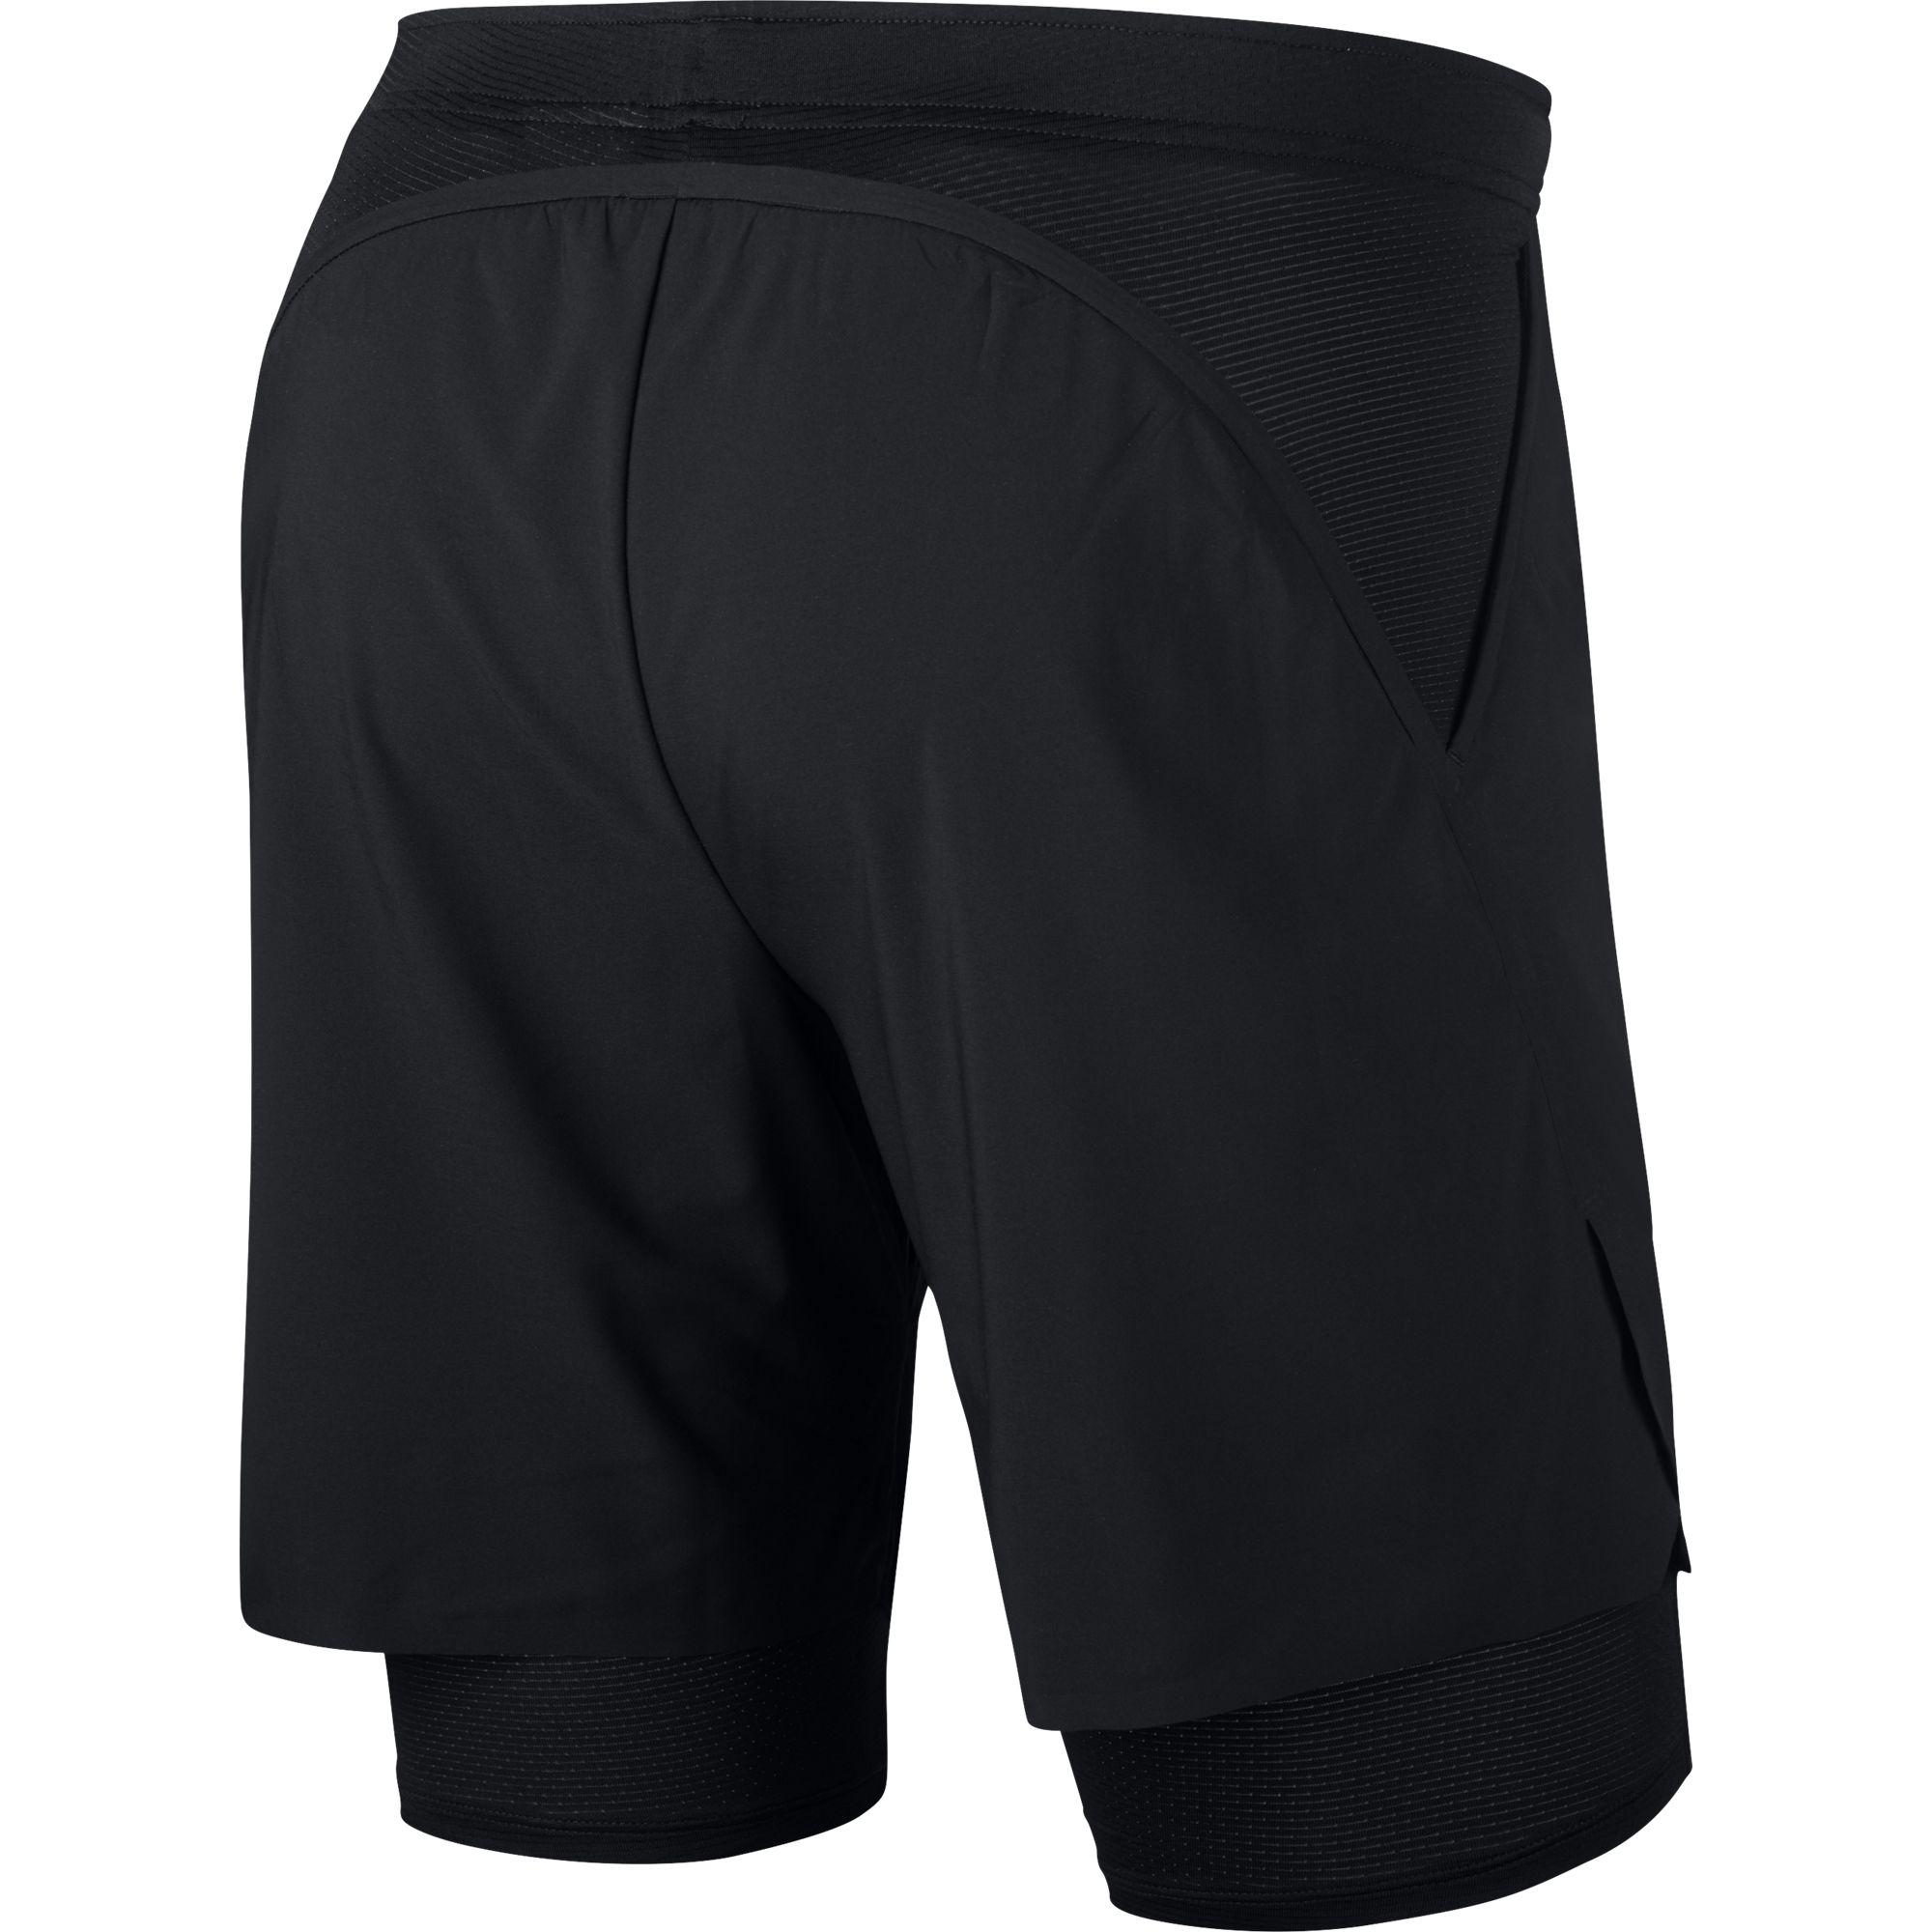 Nike Mens Flex Ace 7 Inch 2-in-1 Tennis Shorts - Black - Tennisnuts.com